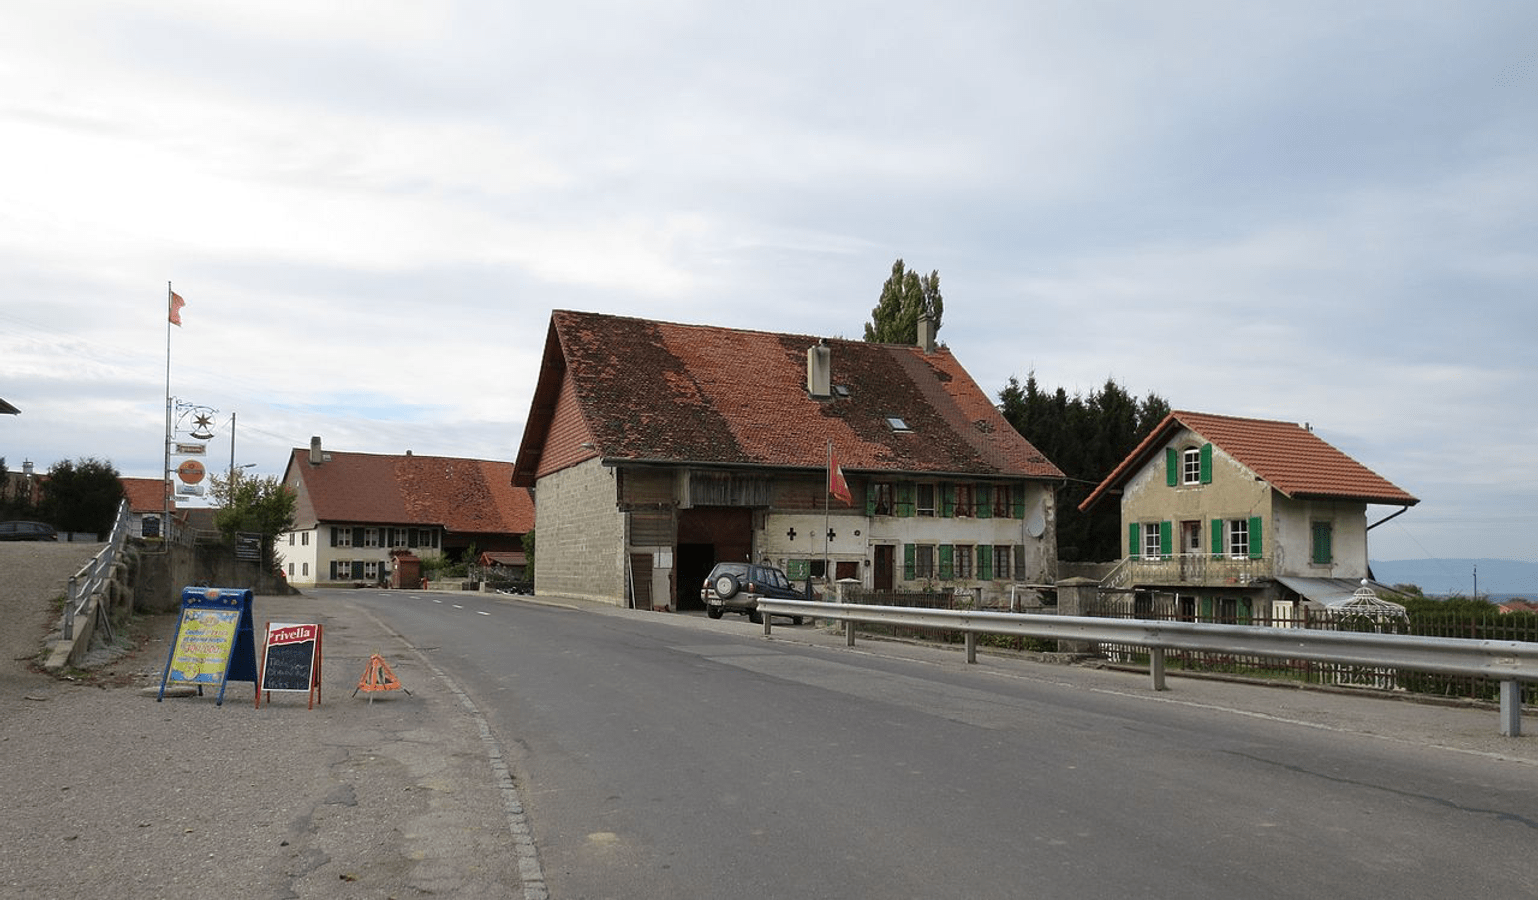 Prévonloup, Canton of Vaud